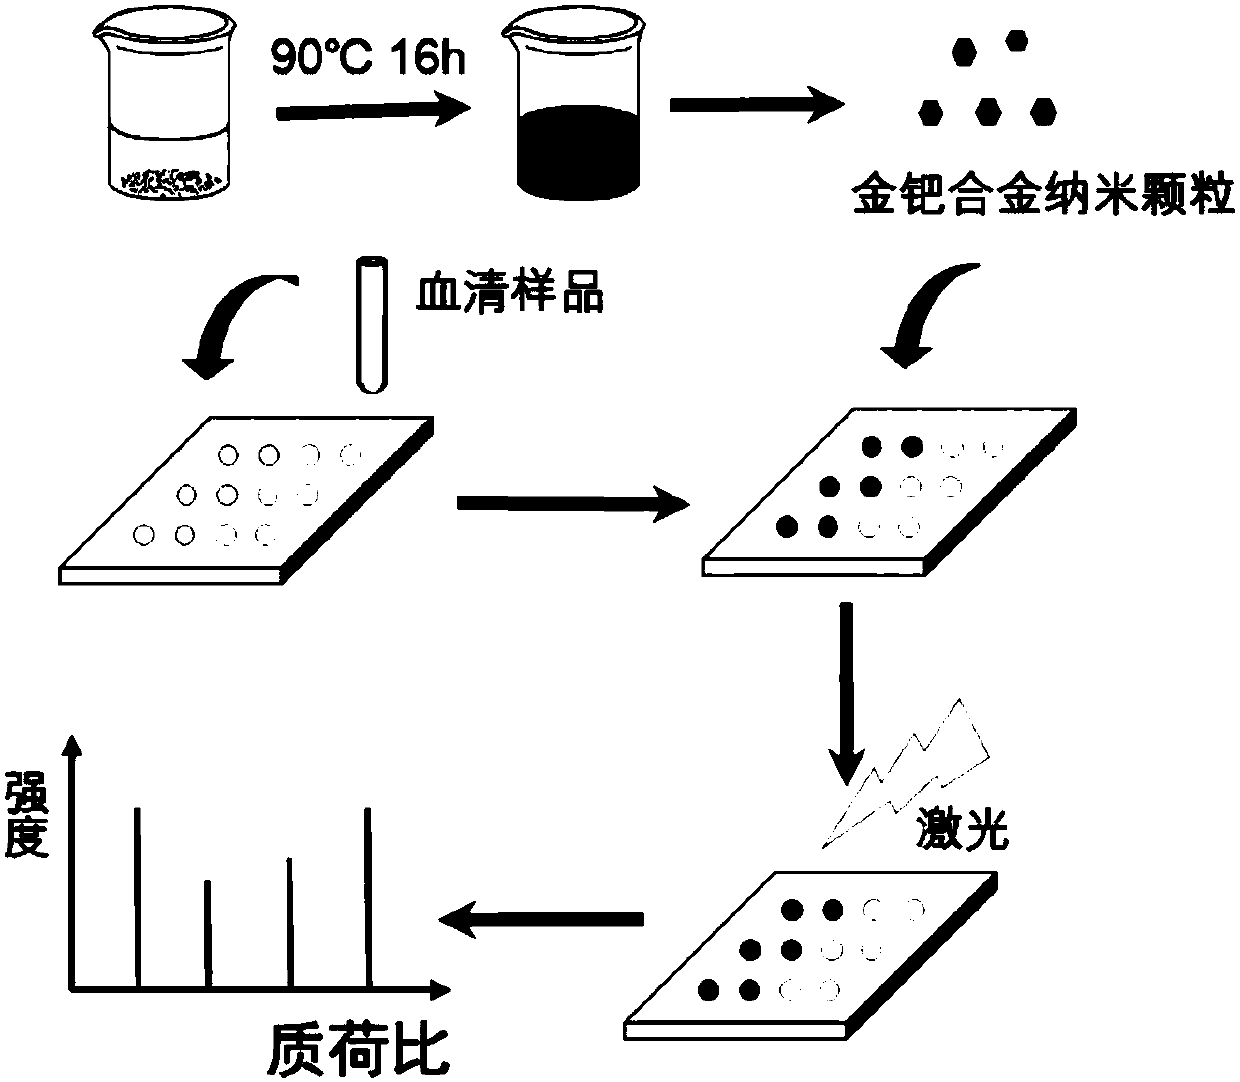 Mass spectrometry method for serum, gold-palladium-based matrix, and preparation method and application of matrix